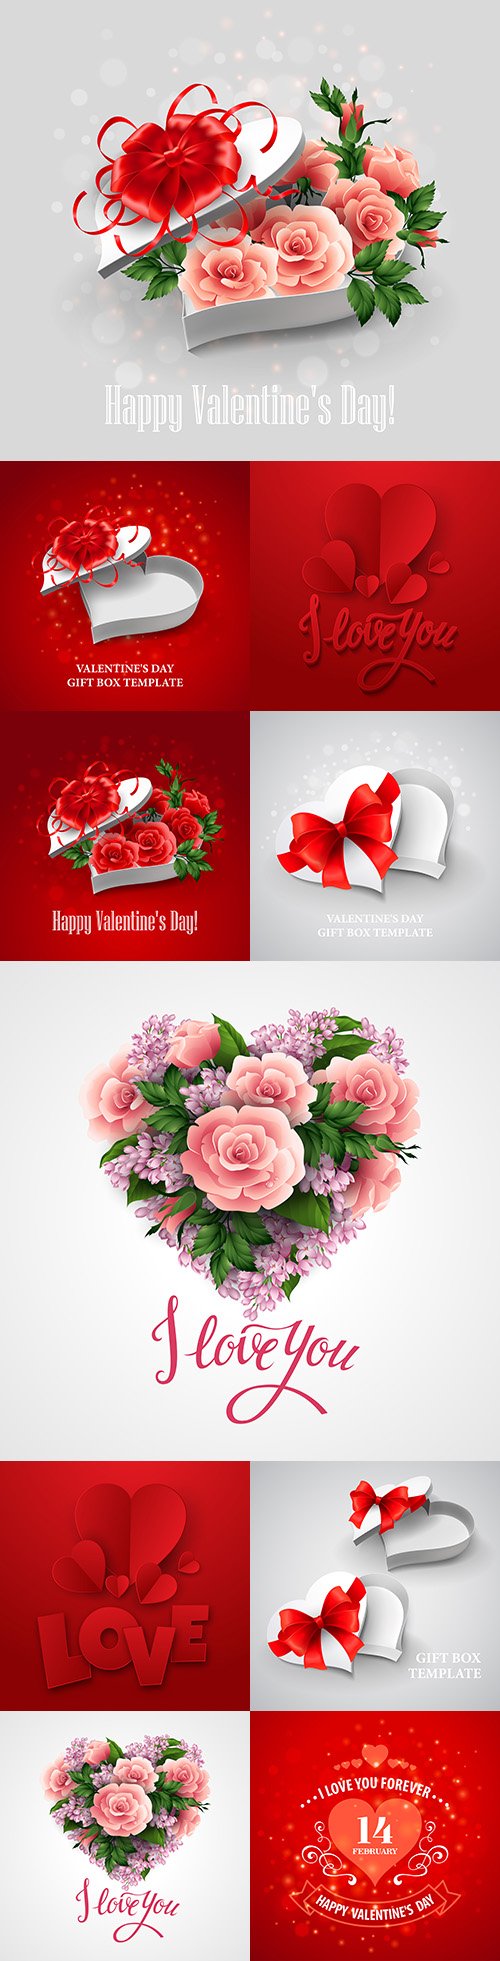 Happy Valentine's Day romantic decorative illustrations 33